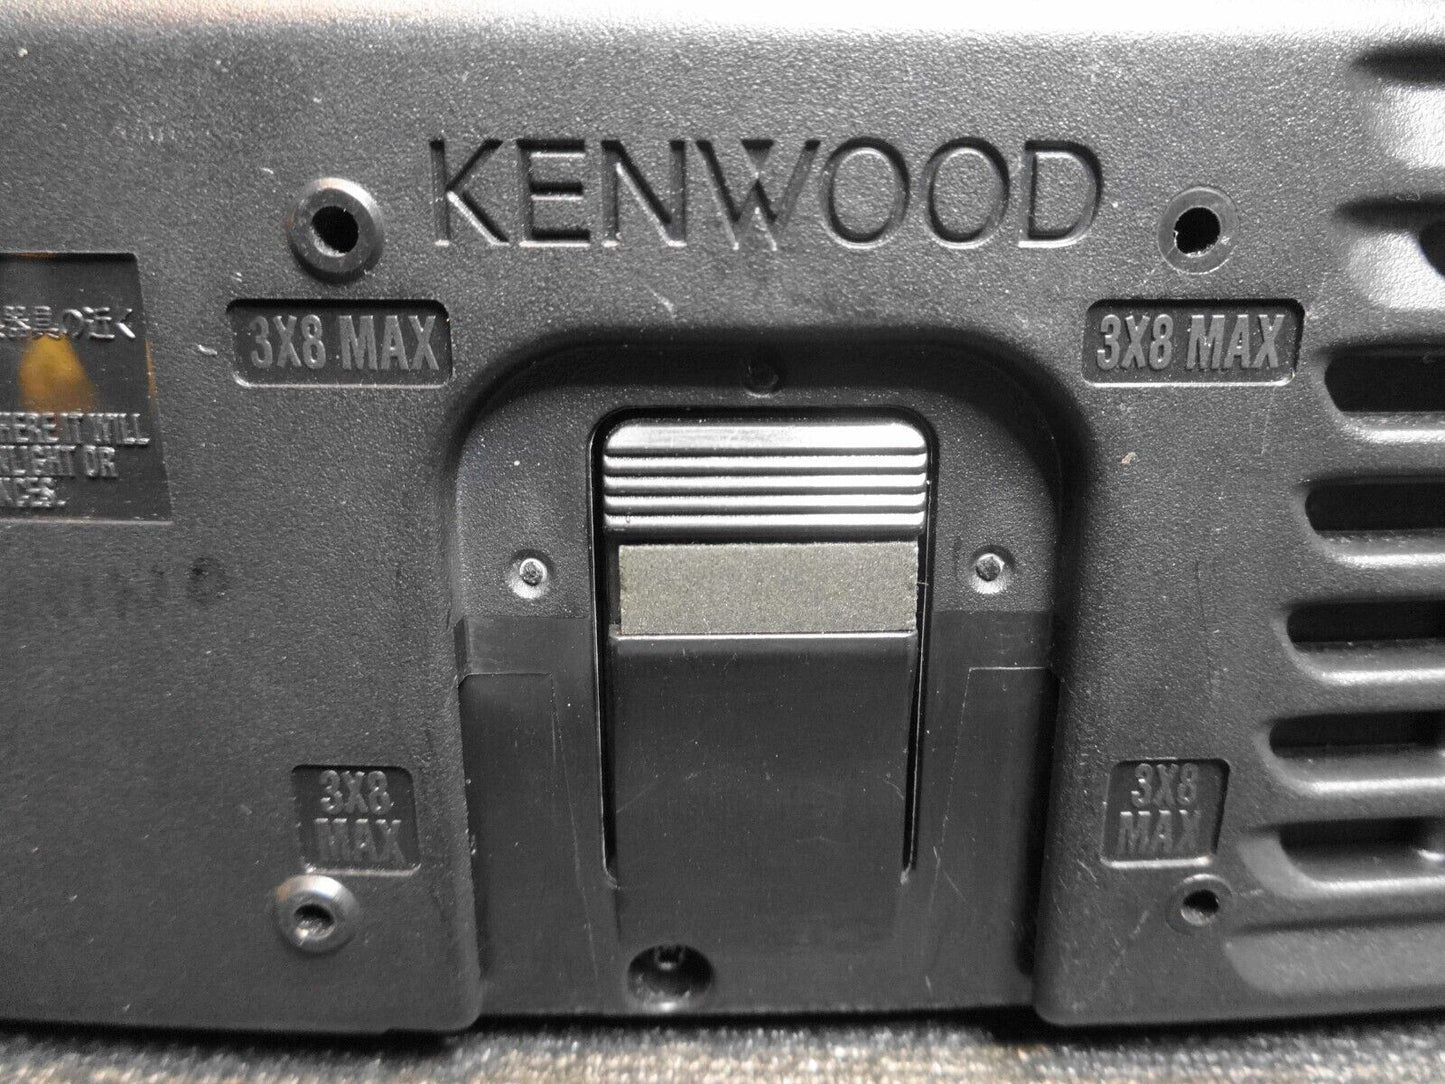 Kenwood TS-480 HF Transceiver Control Head